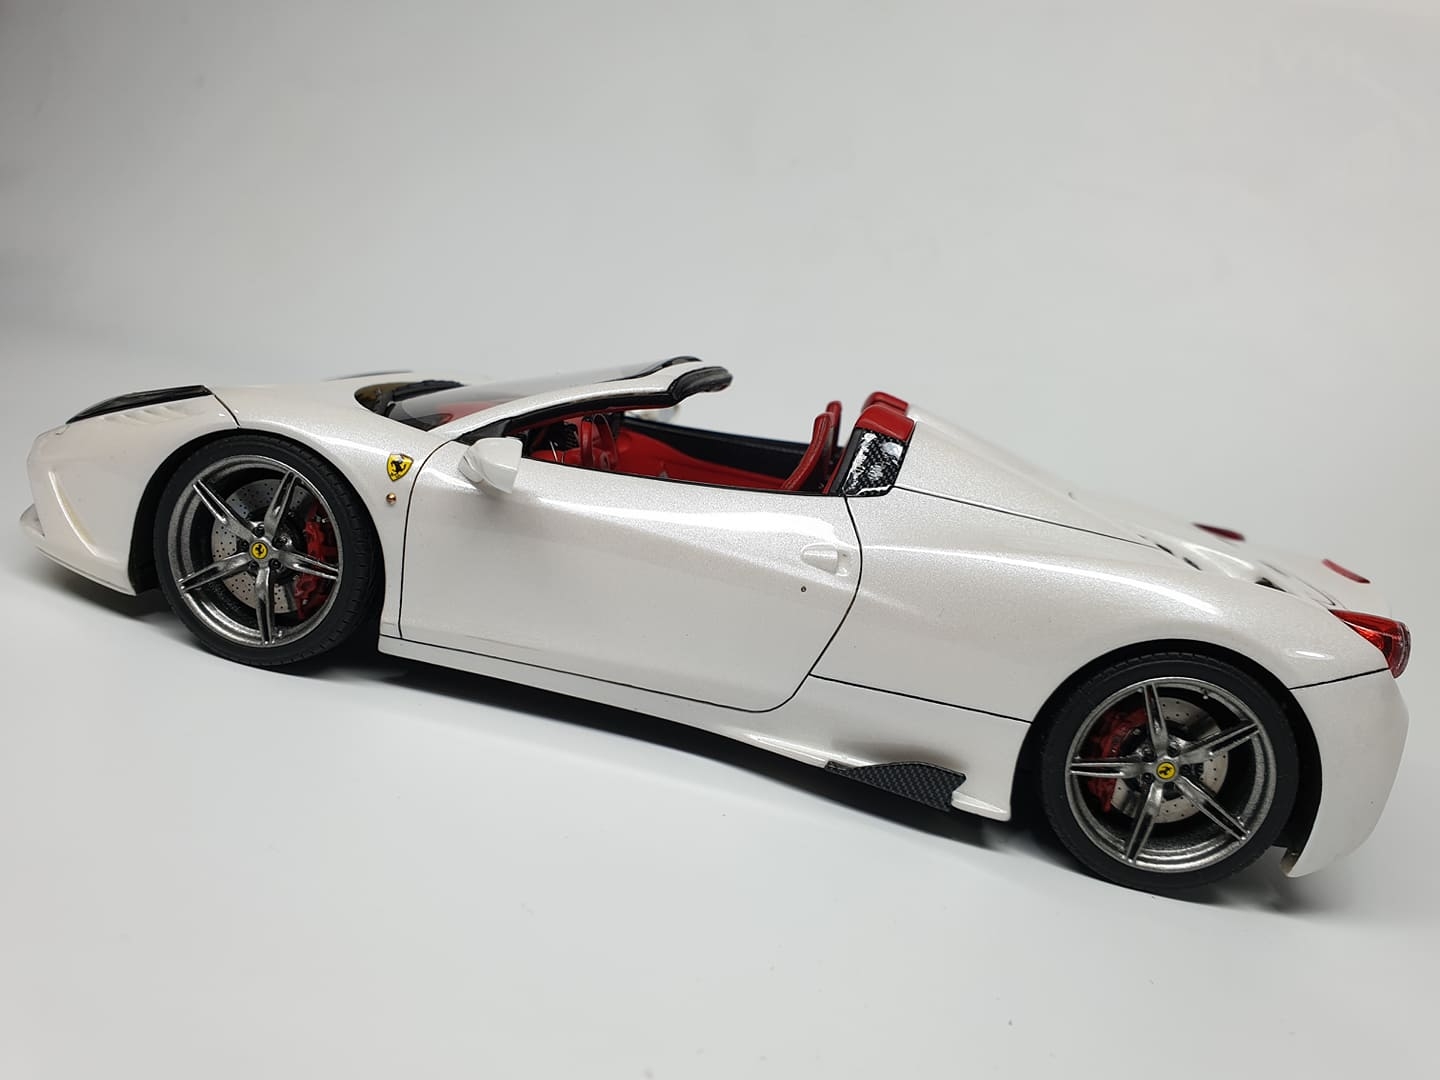 alpha model,1/24 scale model cars,resin car model kits,1/24 Ferrari 458